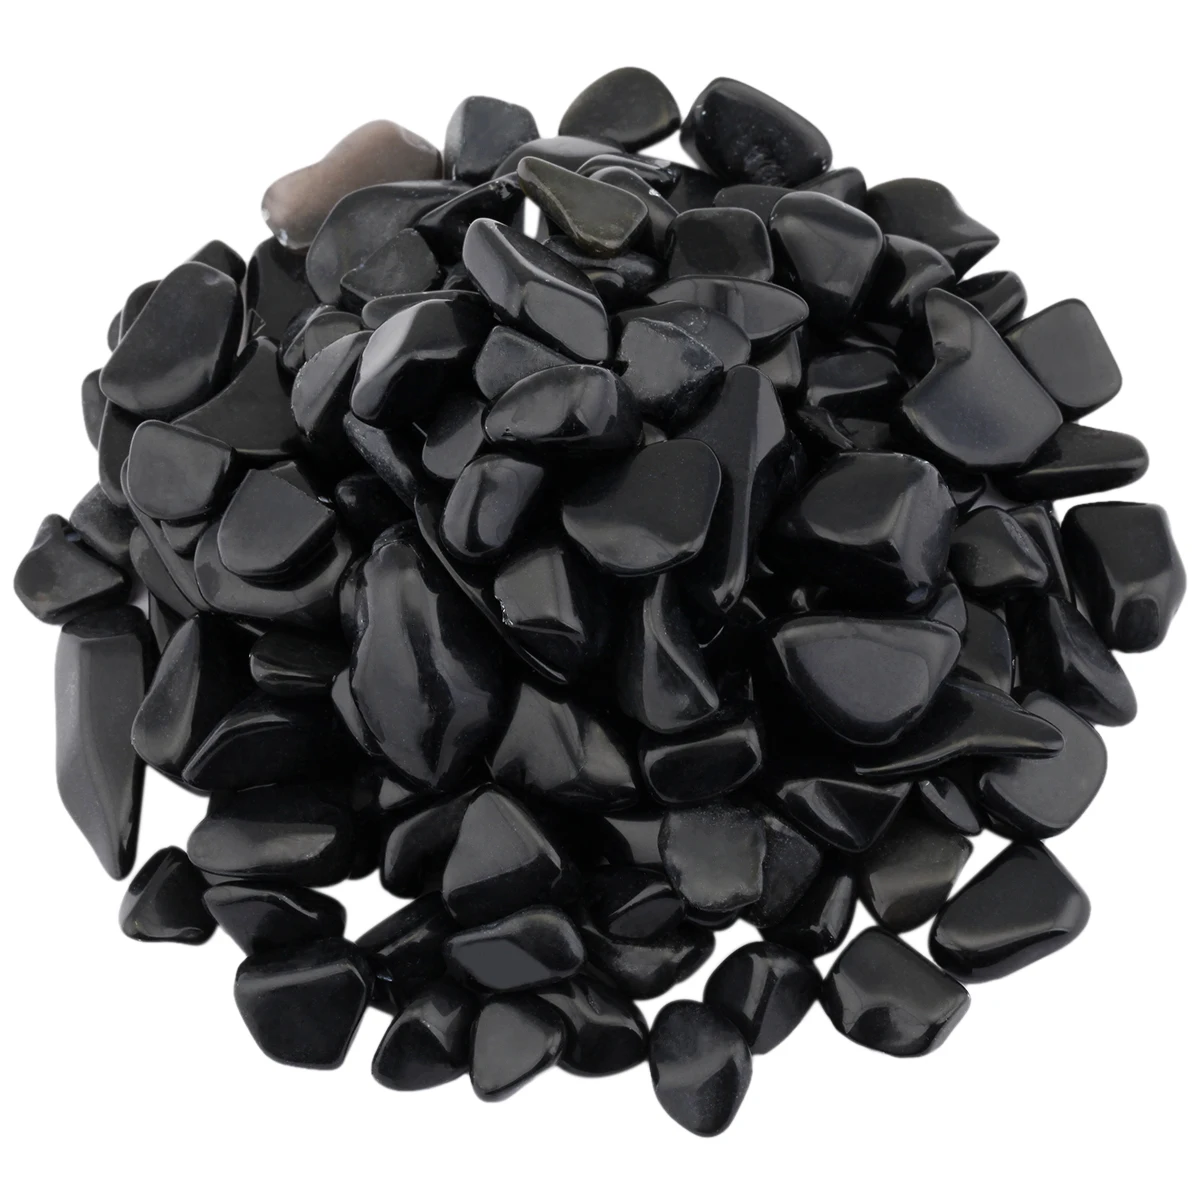 1 Pound(460g) Black Obsidian Stone Gravel Mineral Chips Reiki Healing Tumbled Stones Specimen For Home Aquarium Decoration